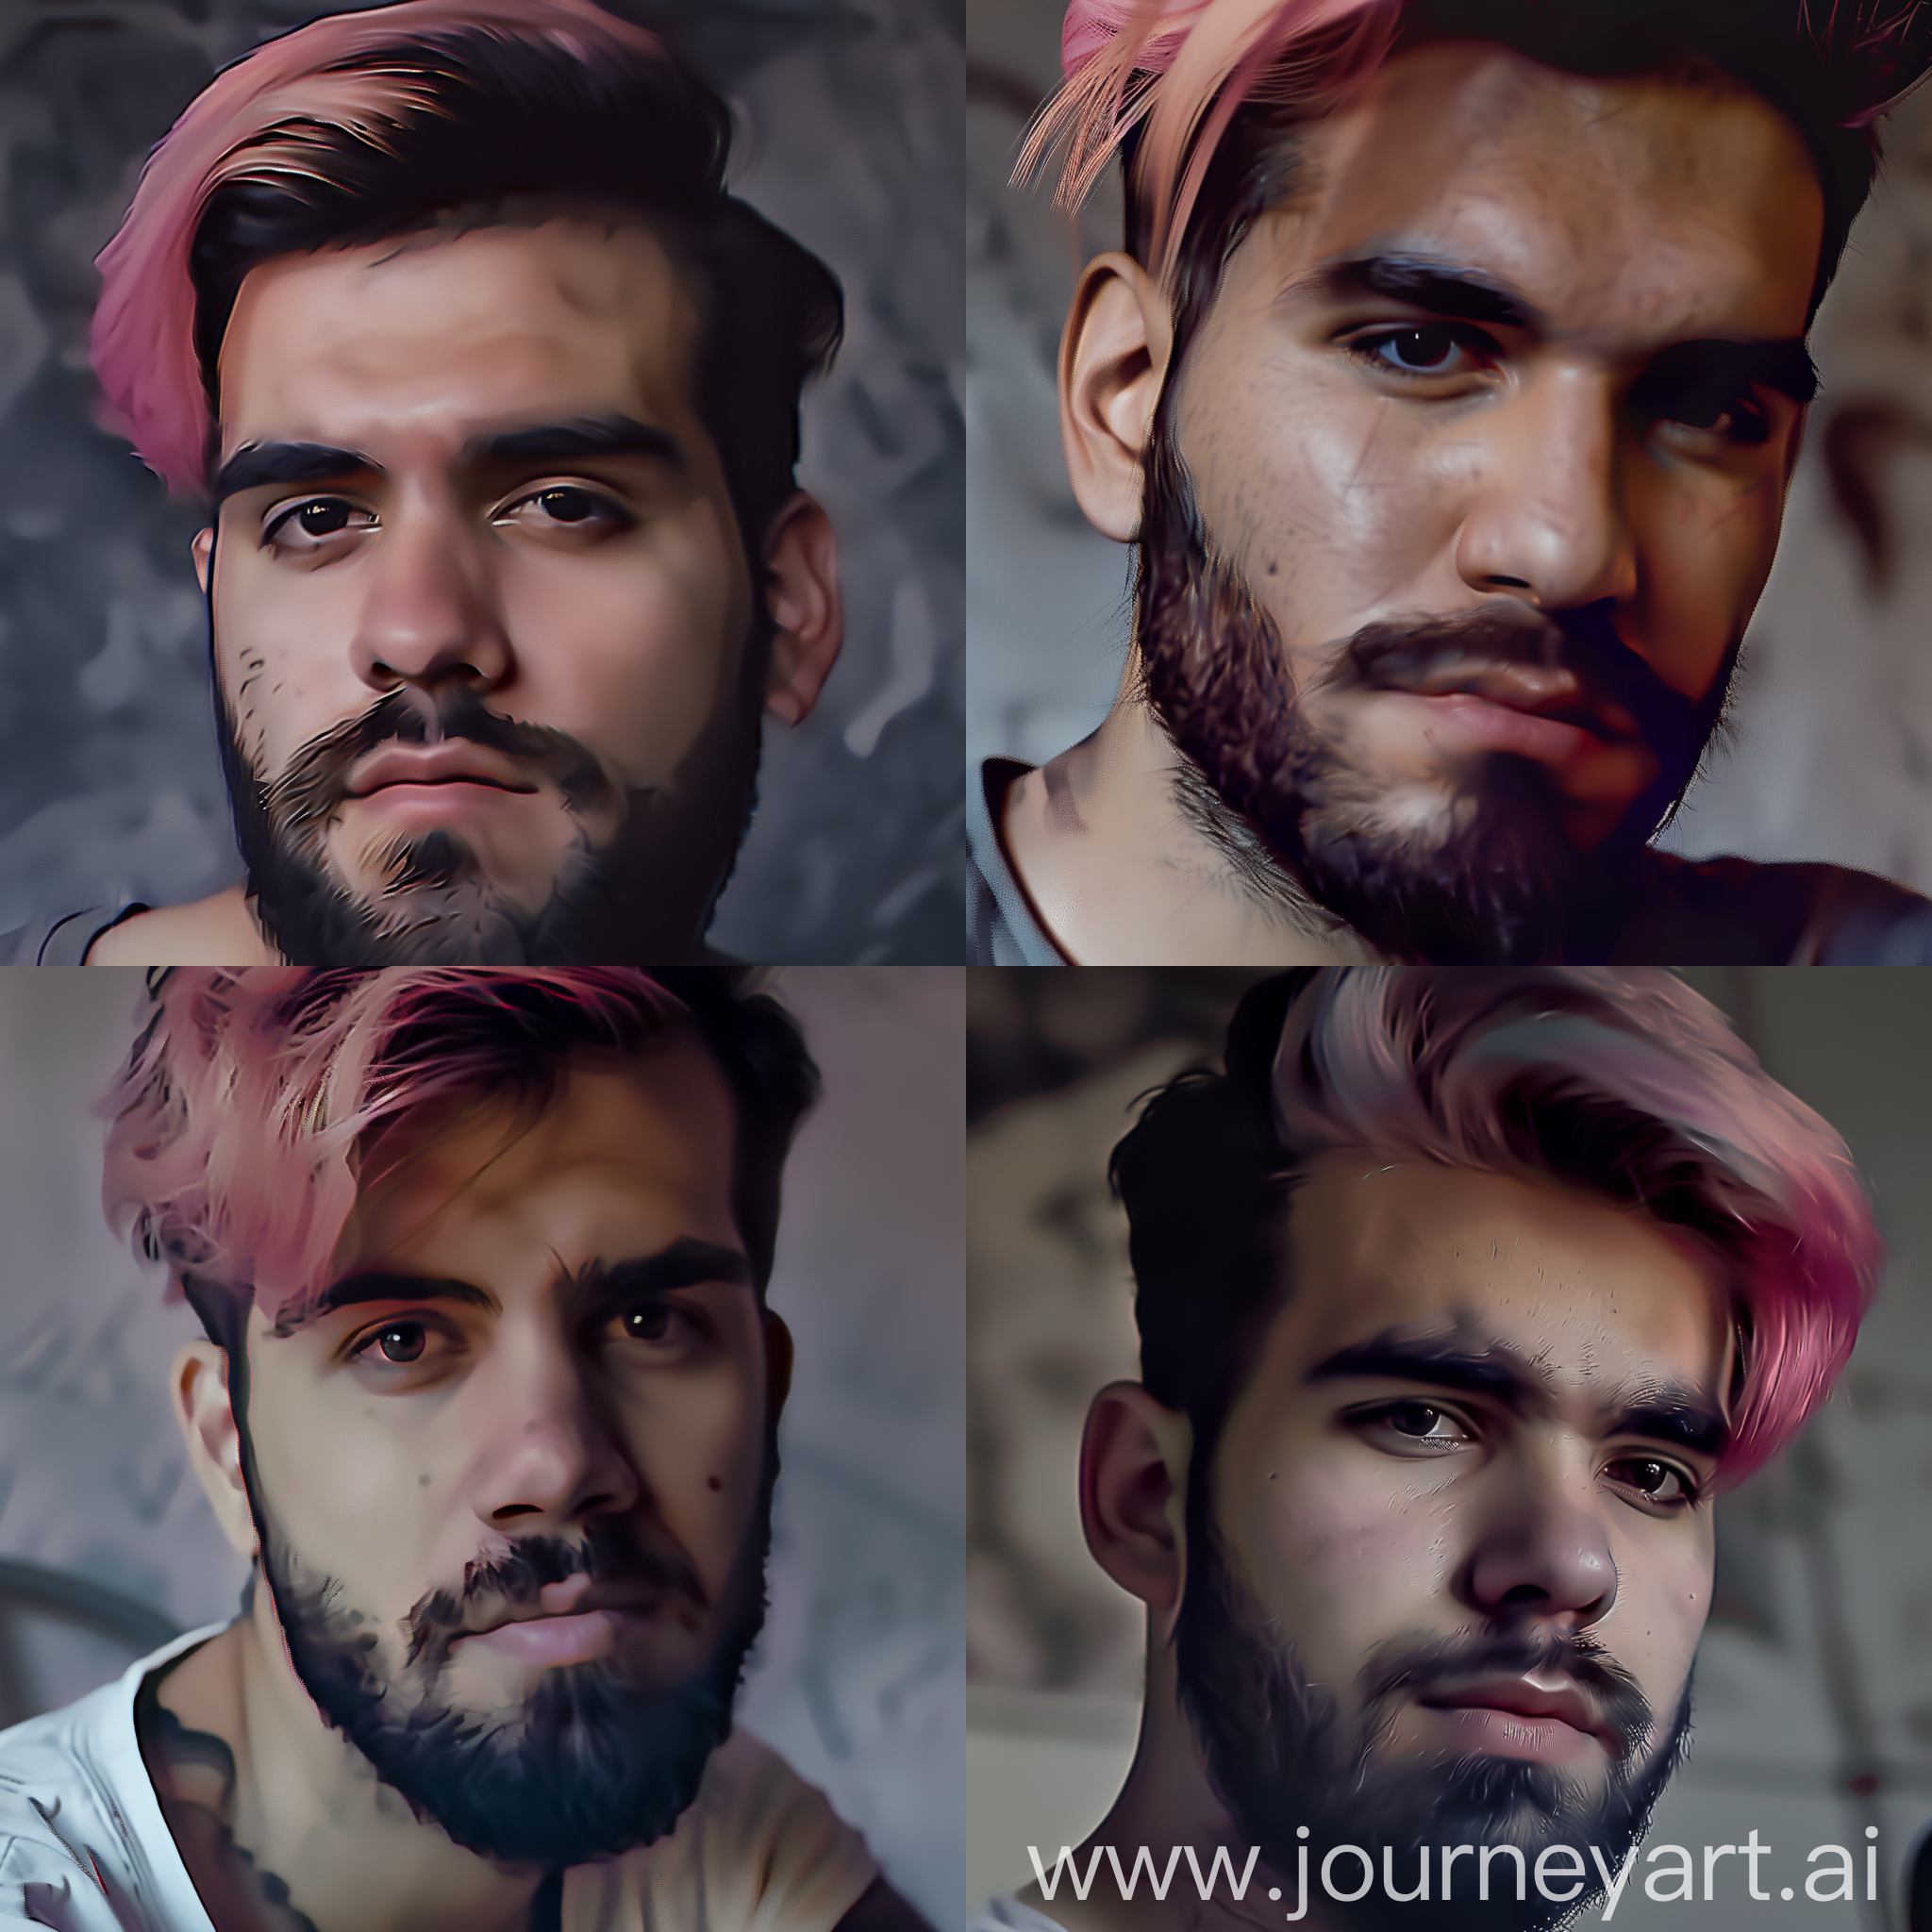 https://i.ibb.co/K7NBsm2/ab5nxi-KZ-4x.jpg 27 years old man, looking at camera, pink dyed hair, black beard, ultra realistic, pro lighting, pro shadow, pro, lifelike 